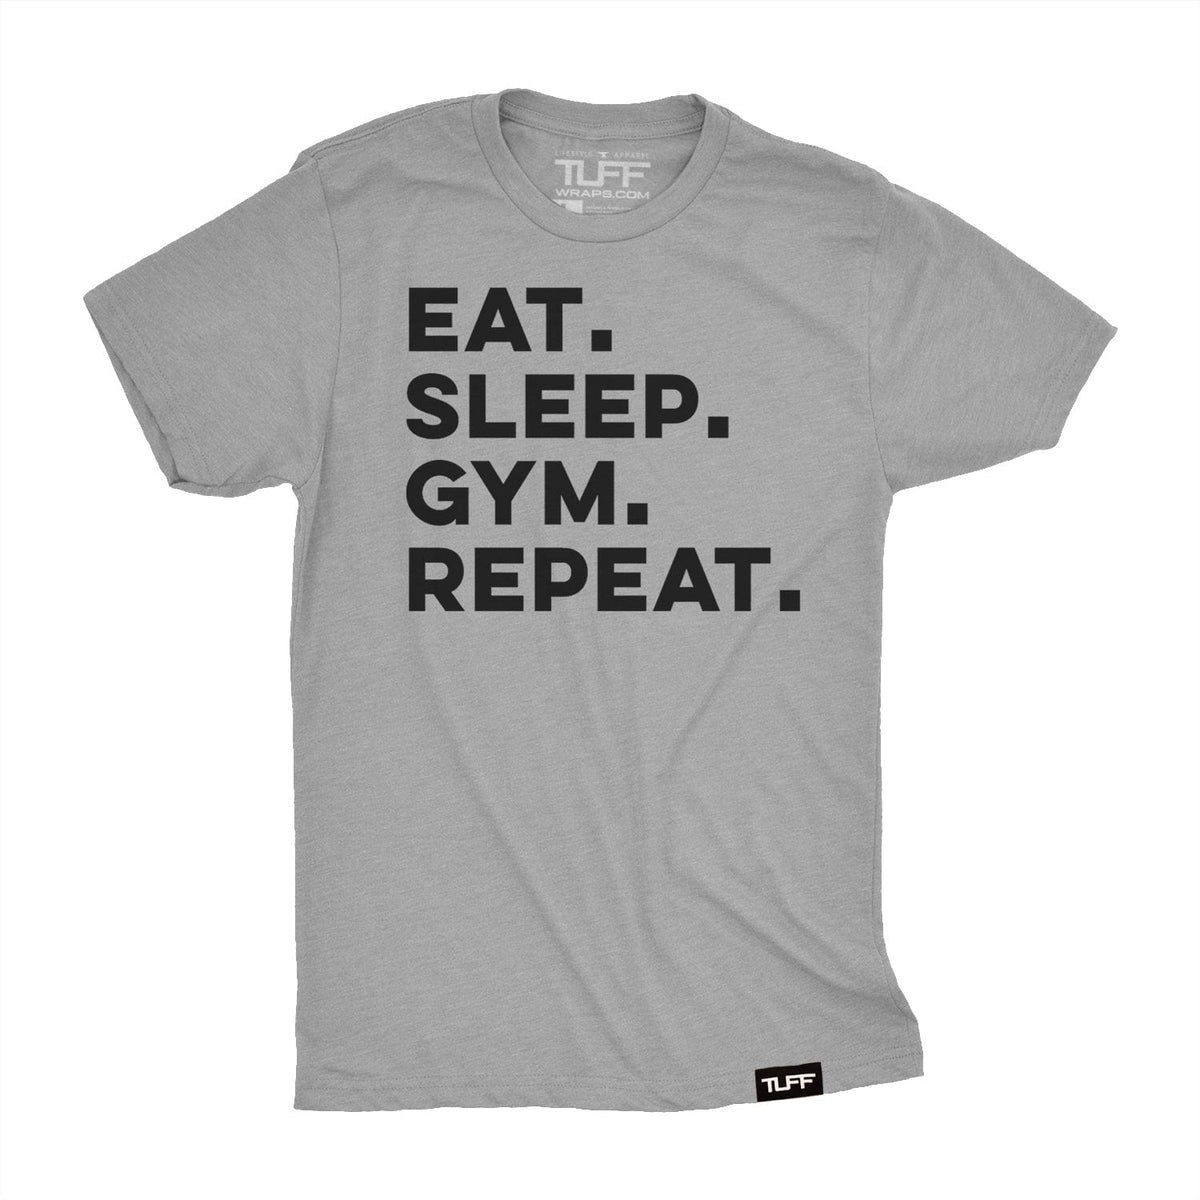 Eat. Sleep. Gym. Repeat. Tee T-shirt